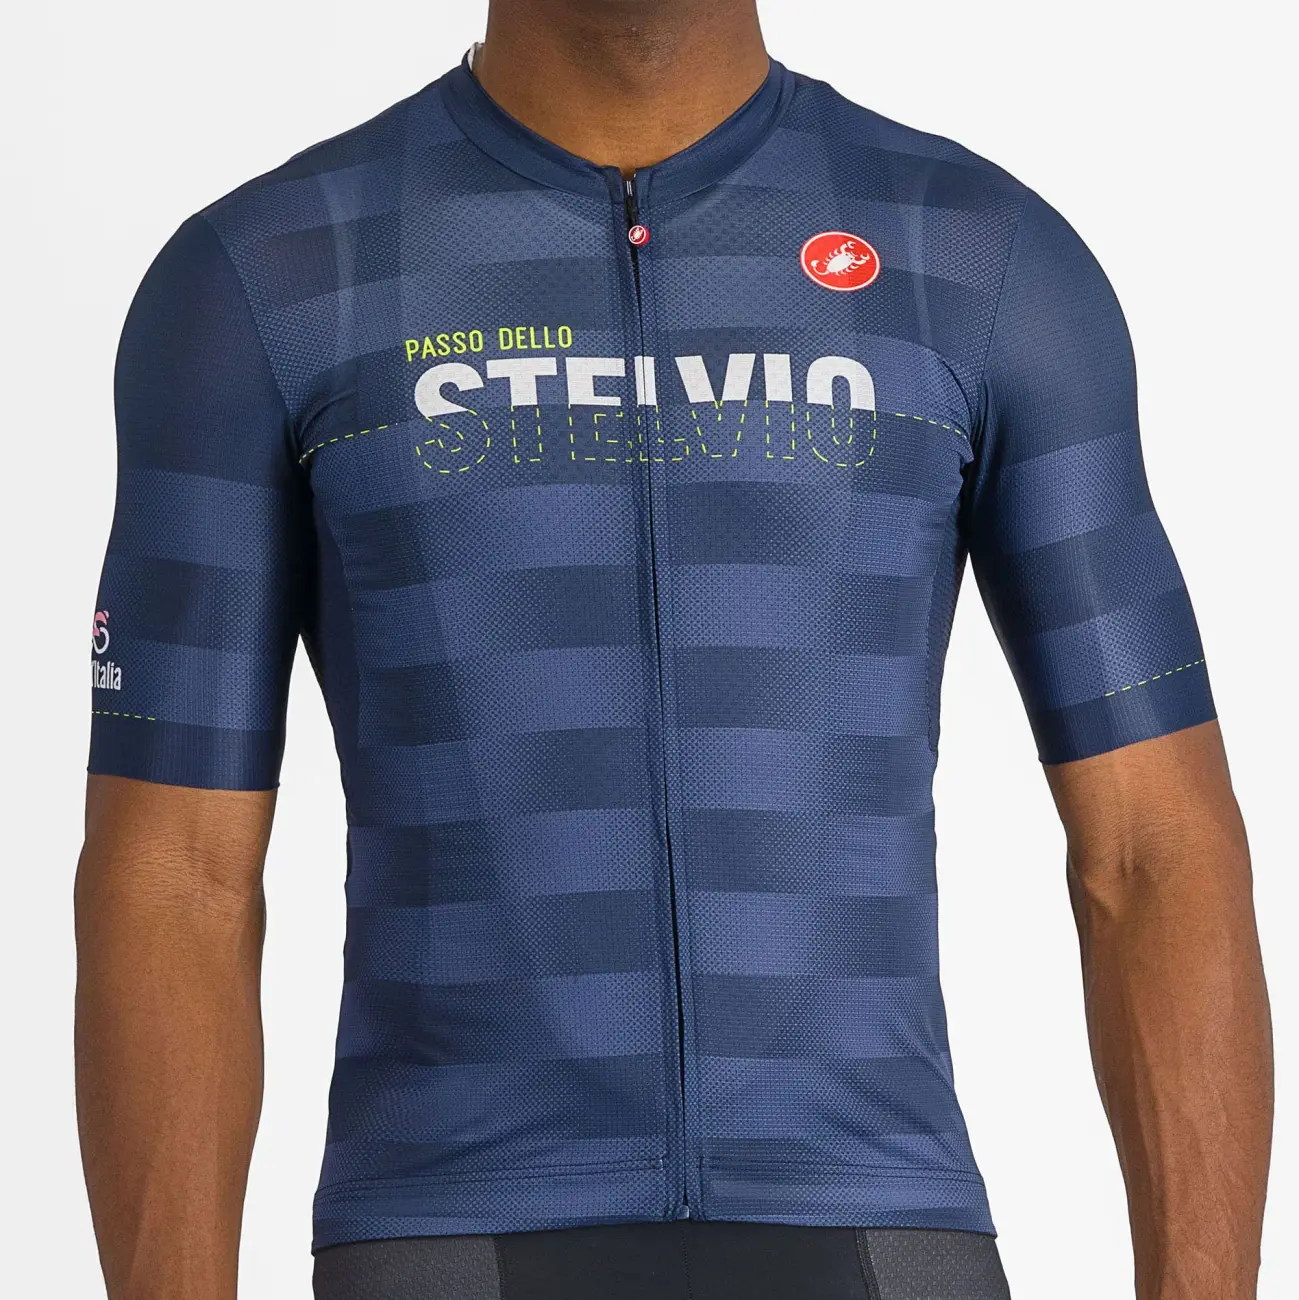 
                CASTELLI Cyklistický dres s krátkým rukávem - #GIRO107 STELVIO - modrá XS
            